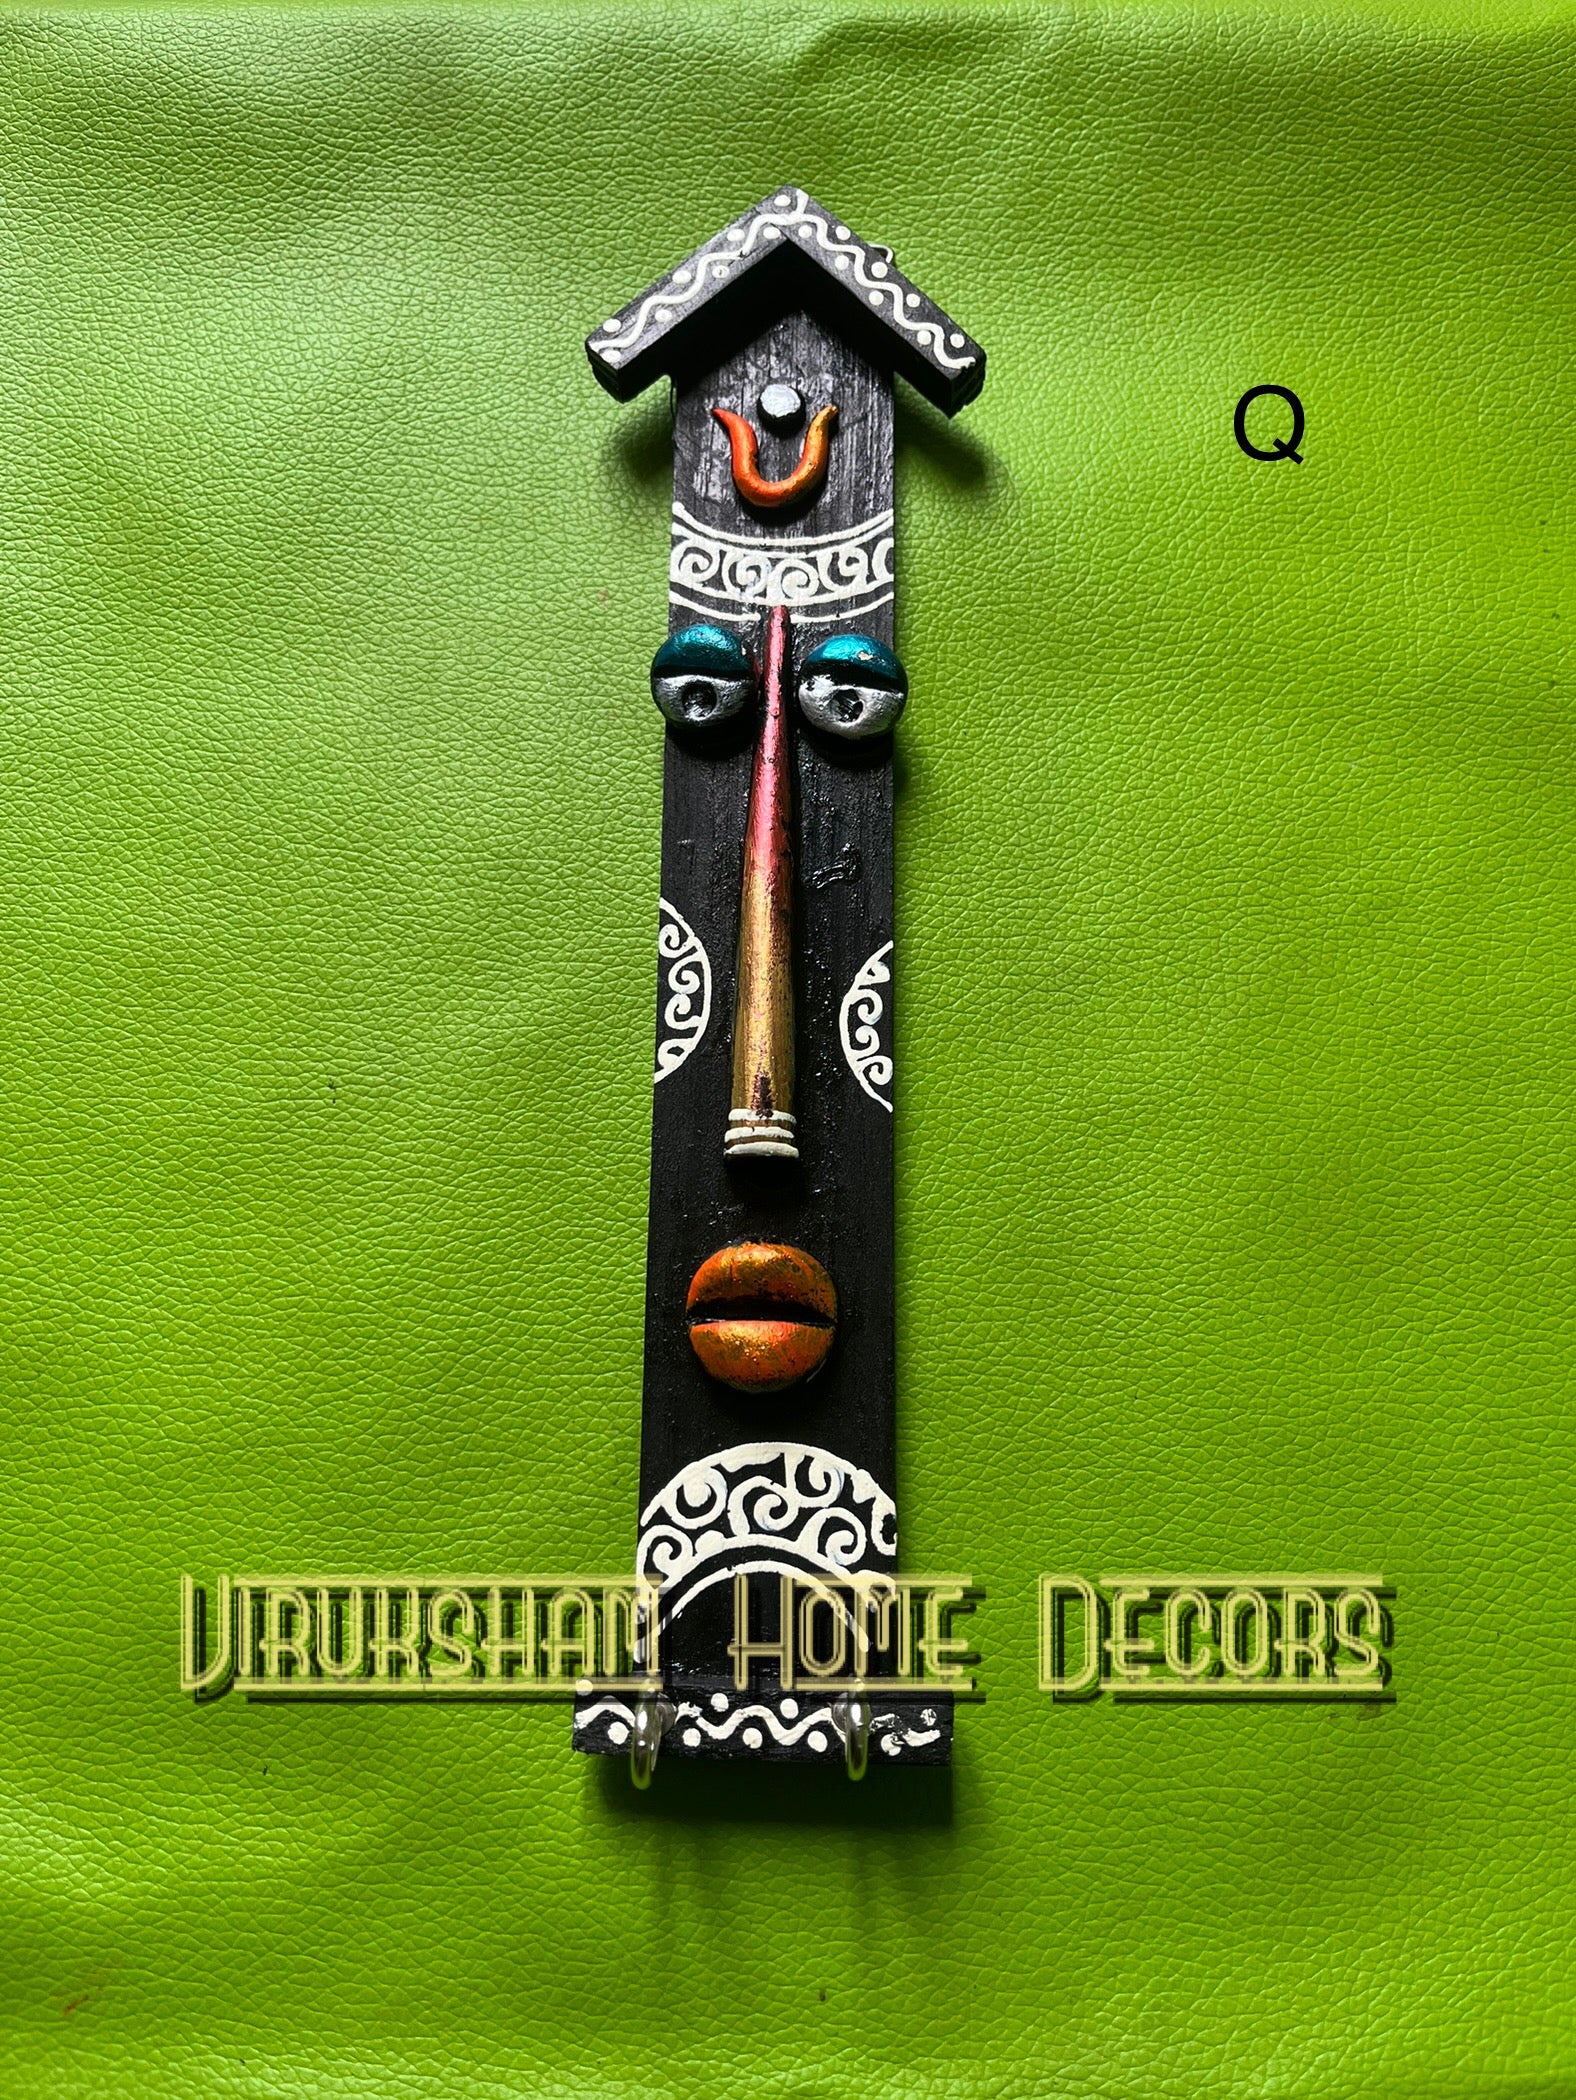 Tribal Keyring Holder Art WSKH 506 approximately 2*8 inches - Q